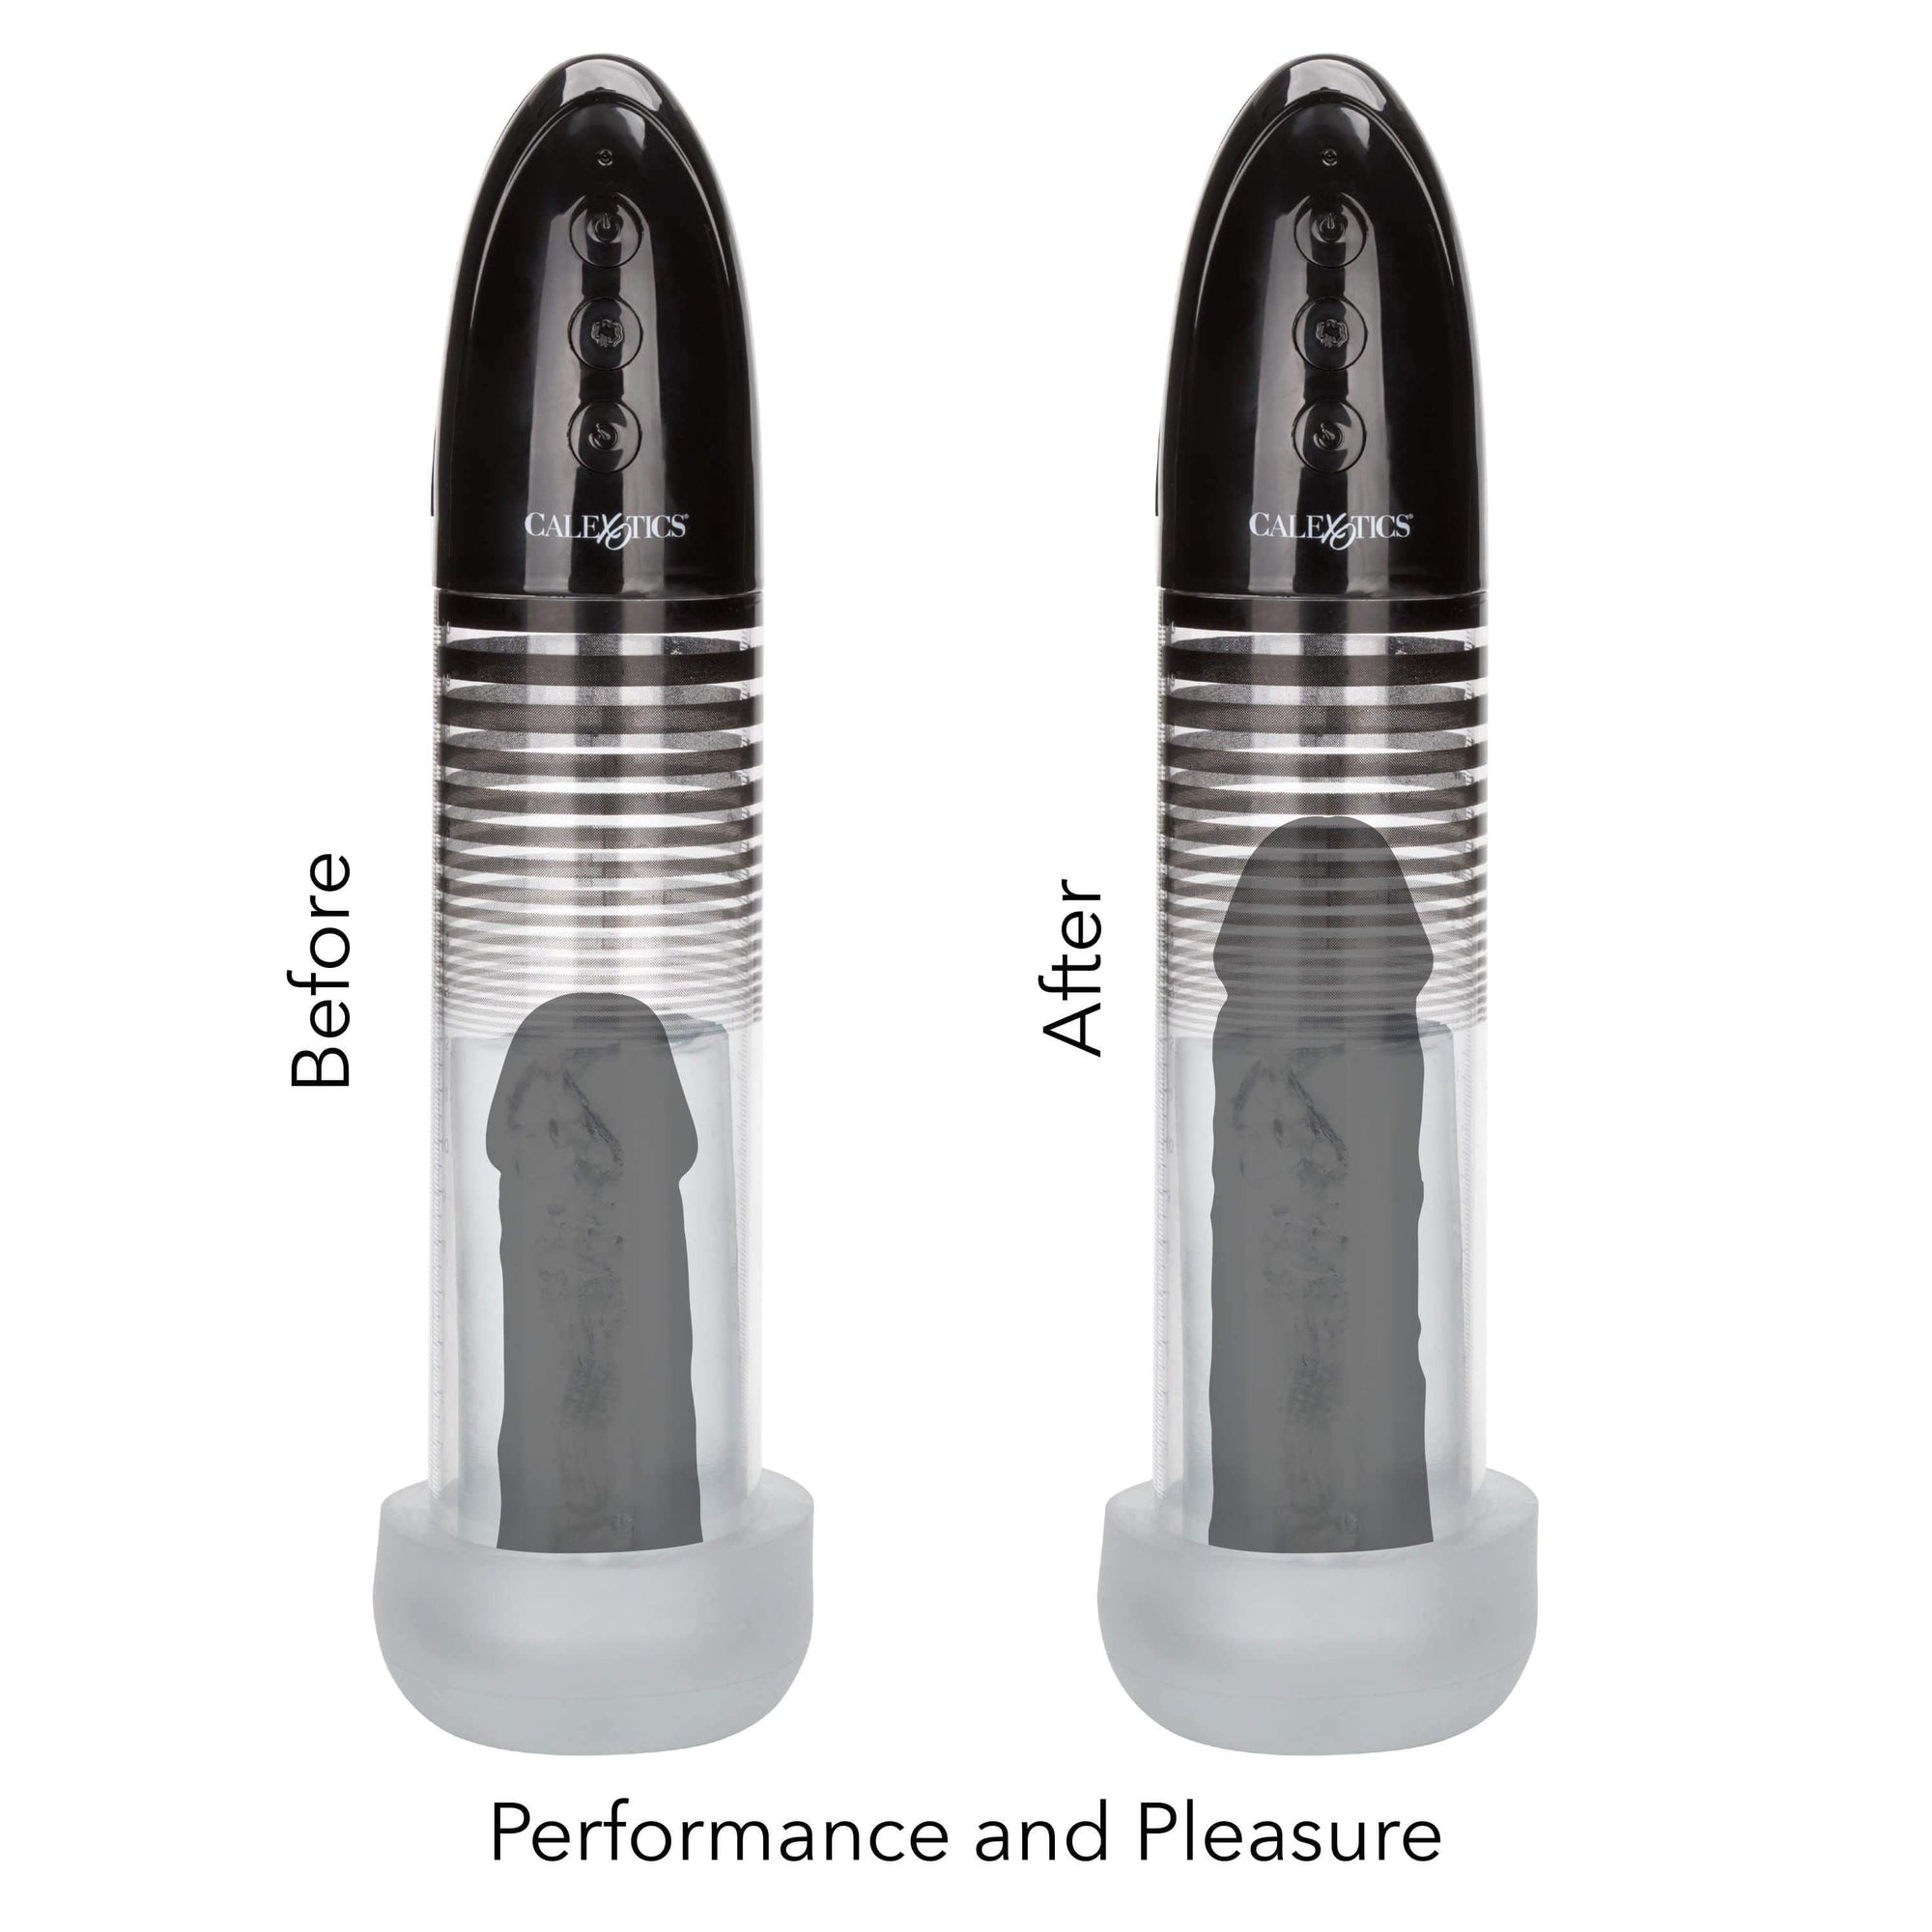 California Exotics - Optimum Series Executive Automatic Smart Pump (Black) -  Penis Pump (Vibration) Rechargeable  Durio.sg